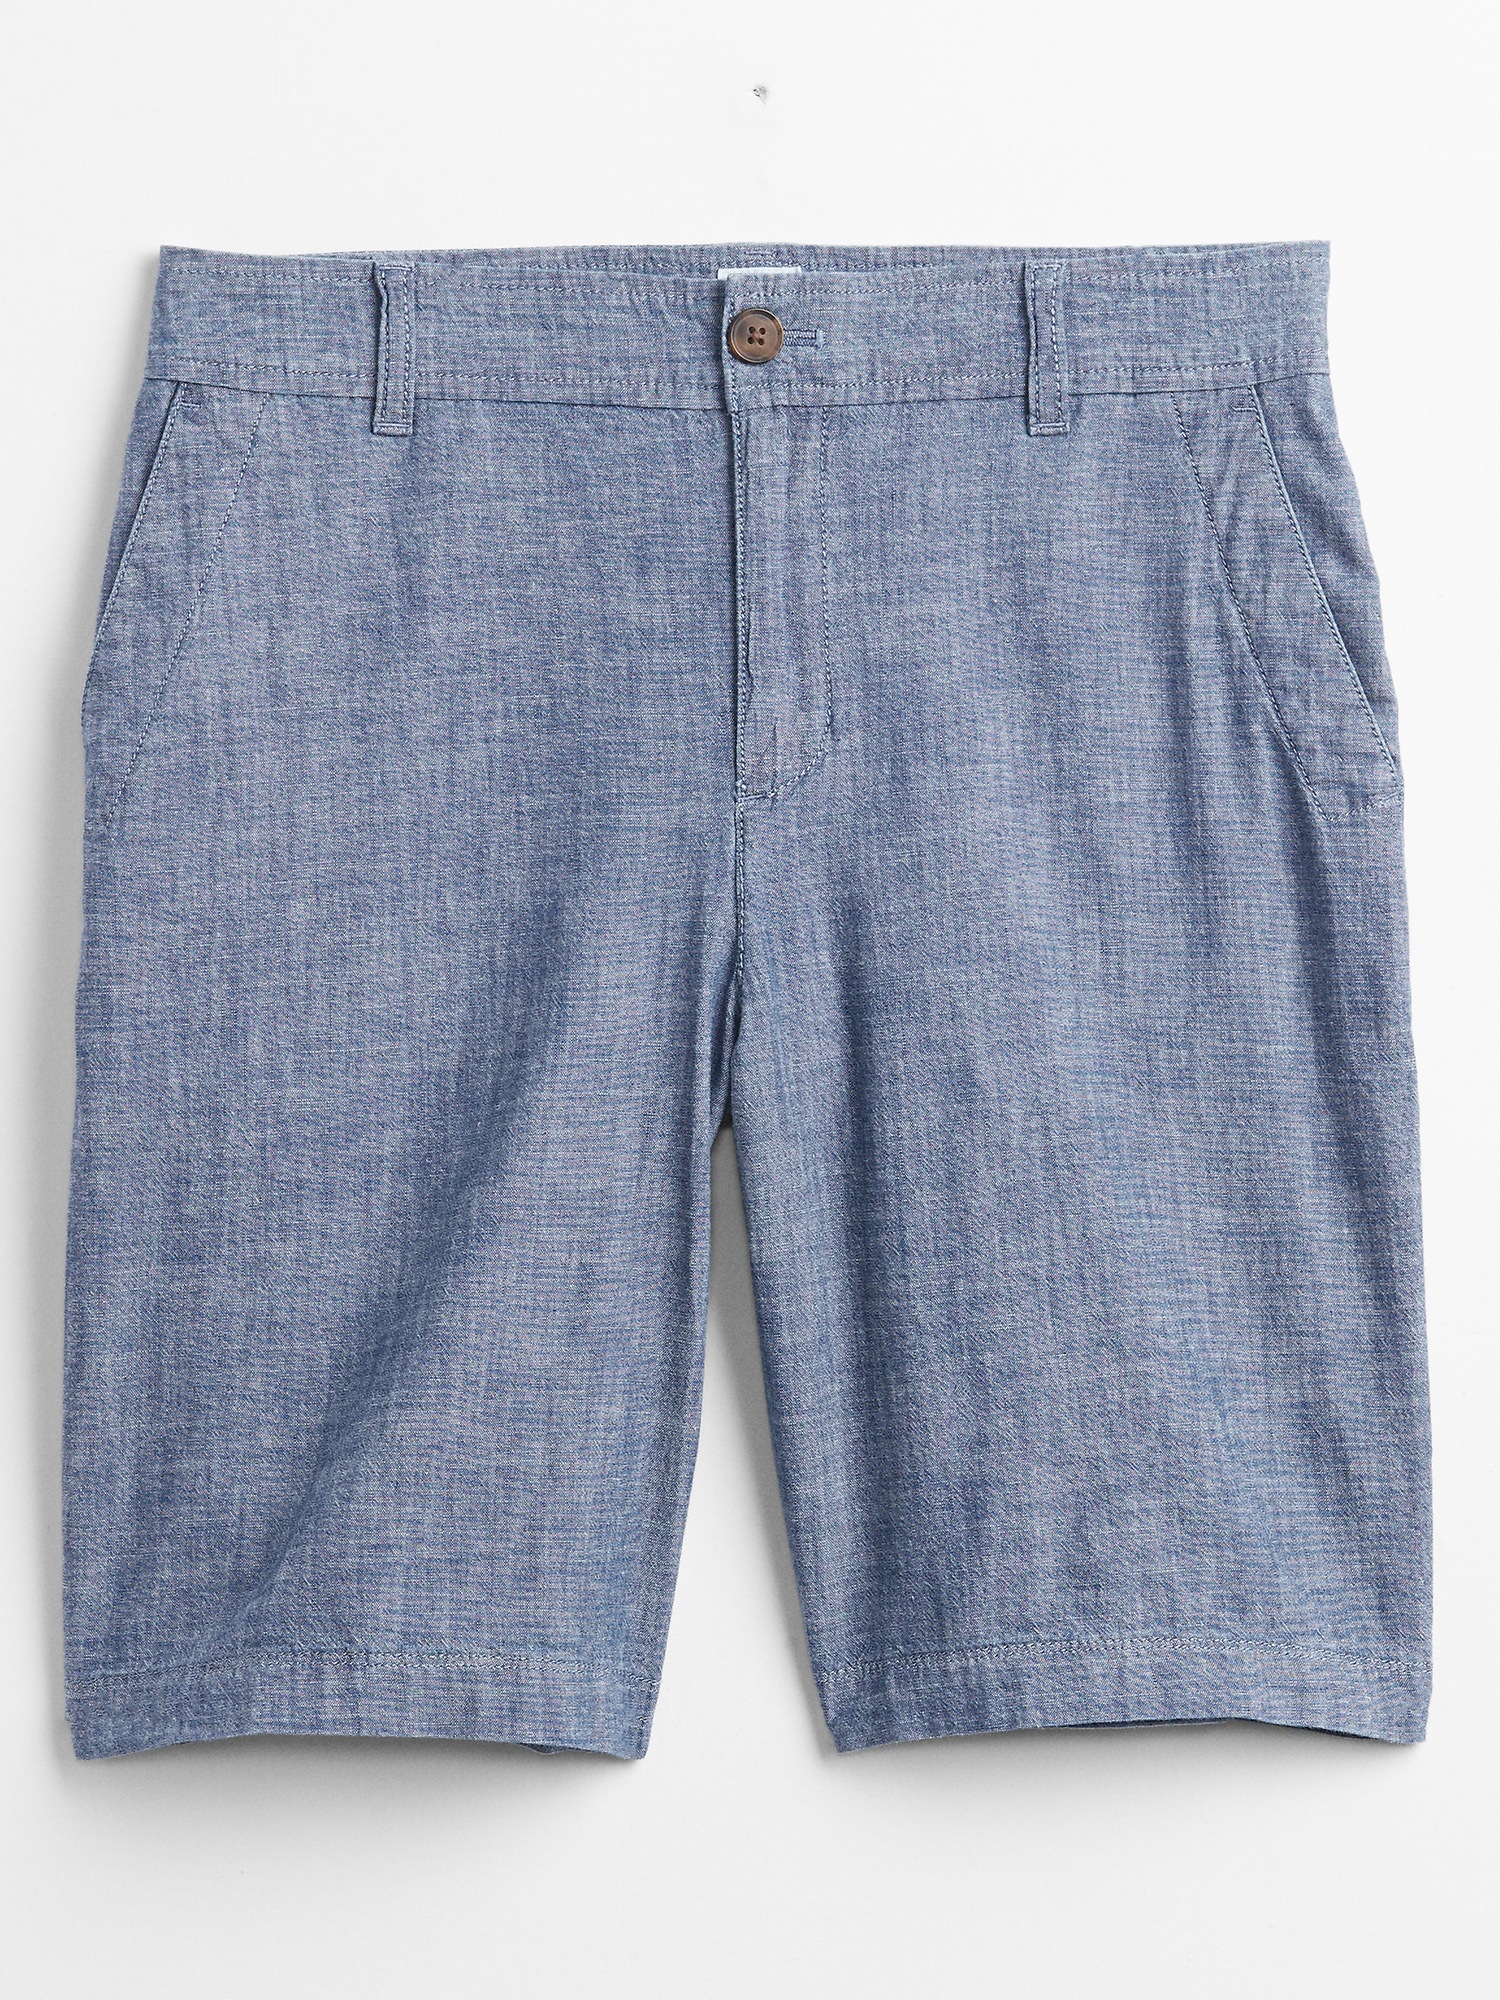 9'' Khaki Bermuda Shorts with Washwell | Gap Factory